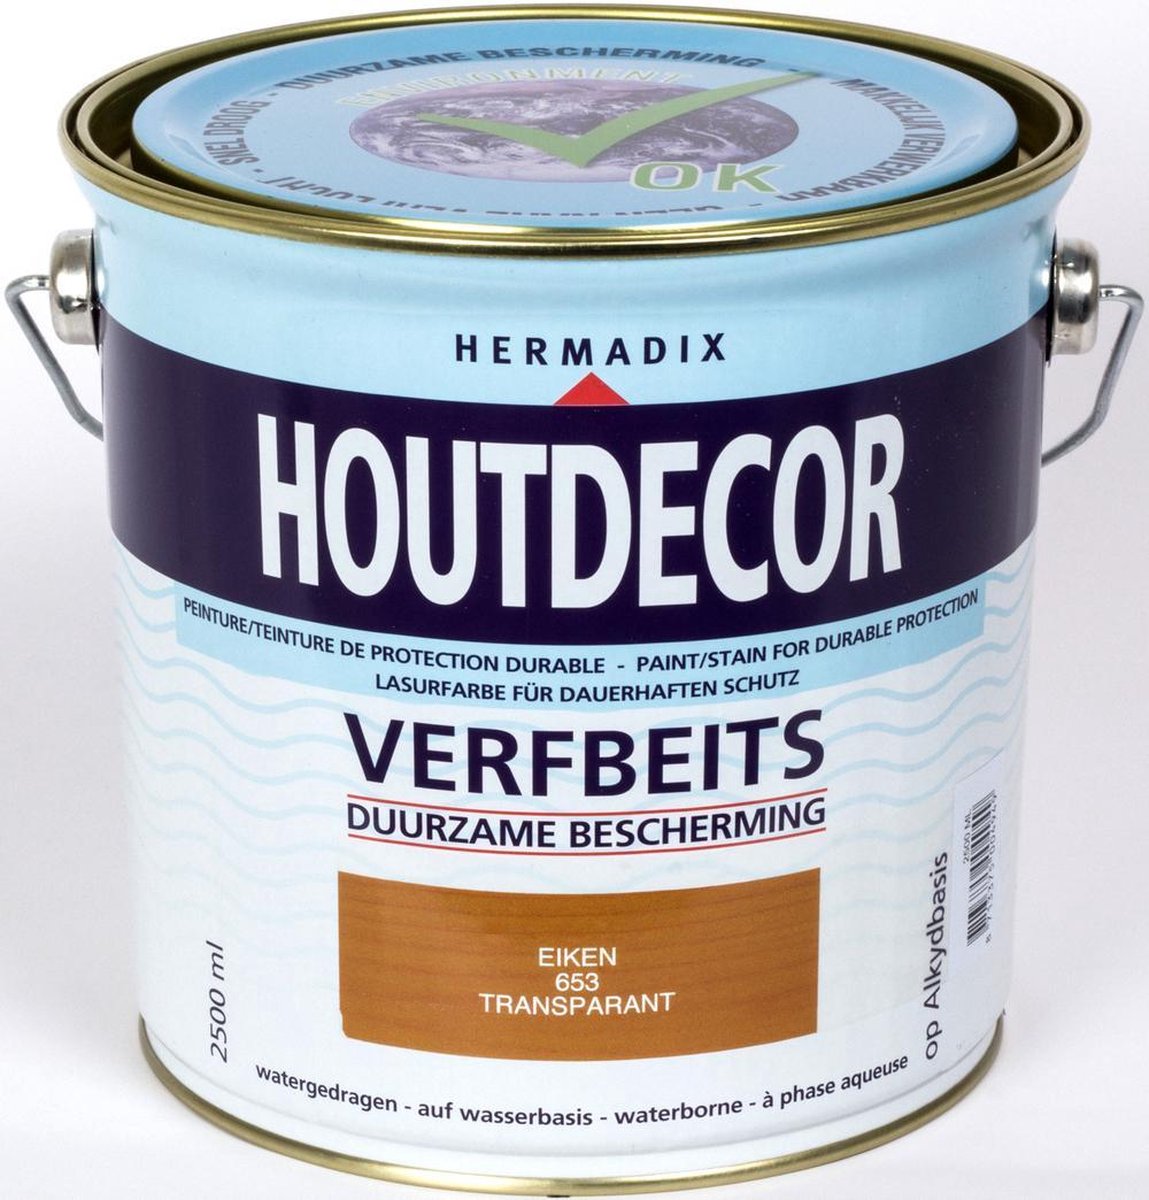 Hermadix Houtdecor Verfbeits Transparant 2,5 liter - 653 Eiken bol.com